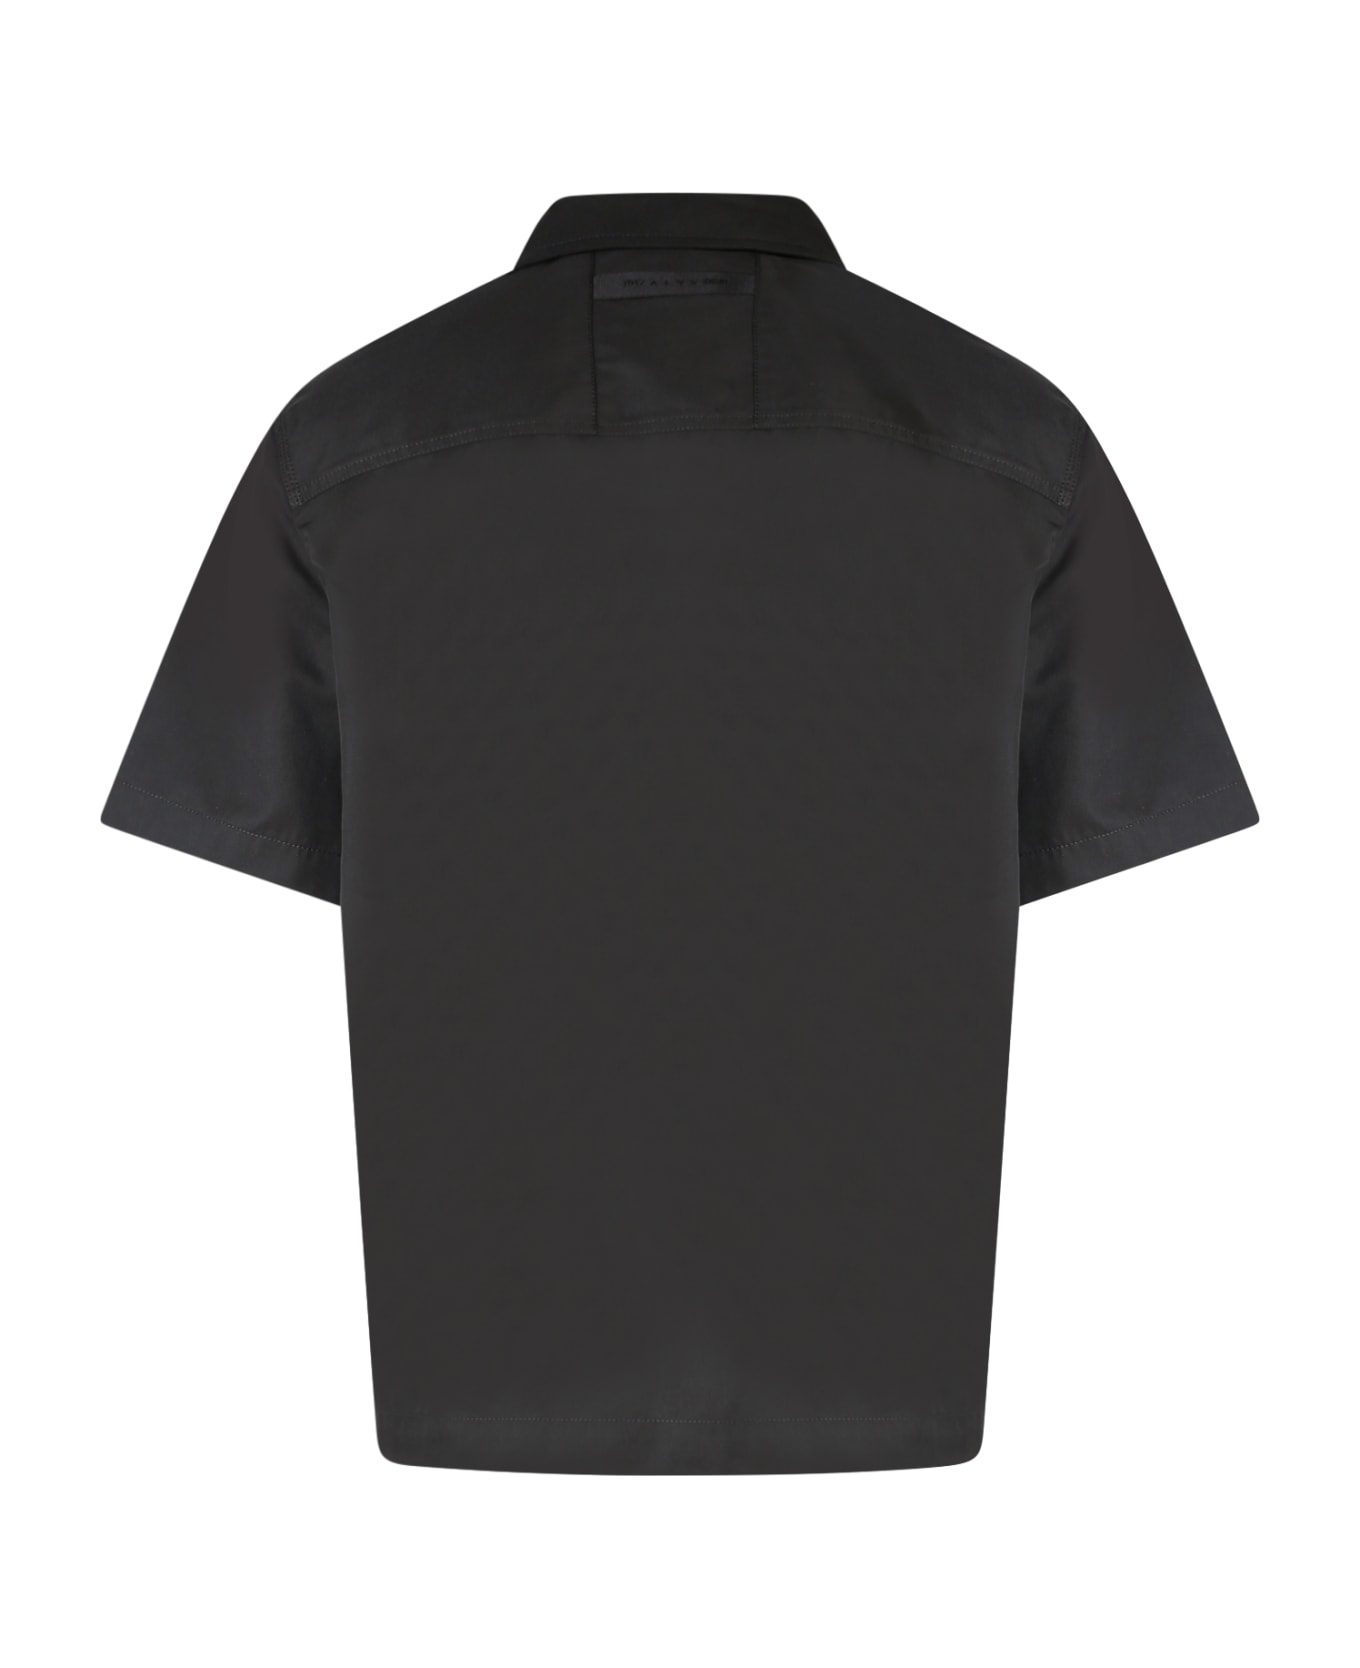 1017 ALYX 9SM Shirt - Black